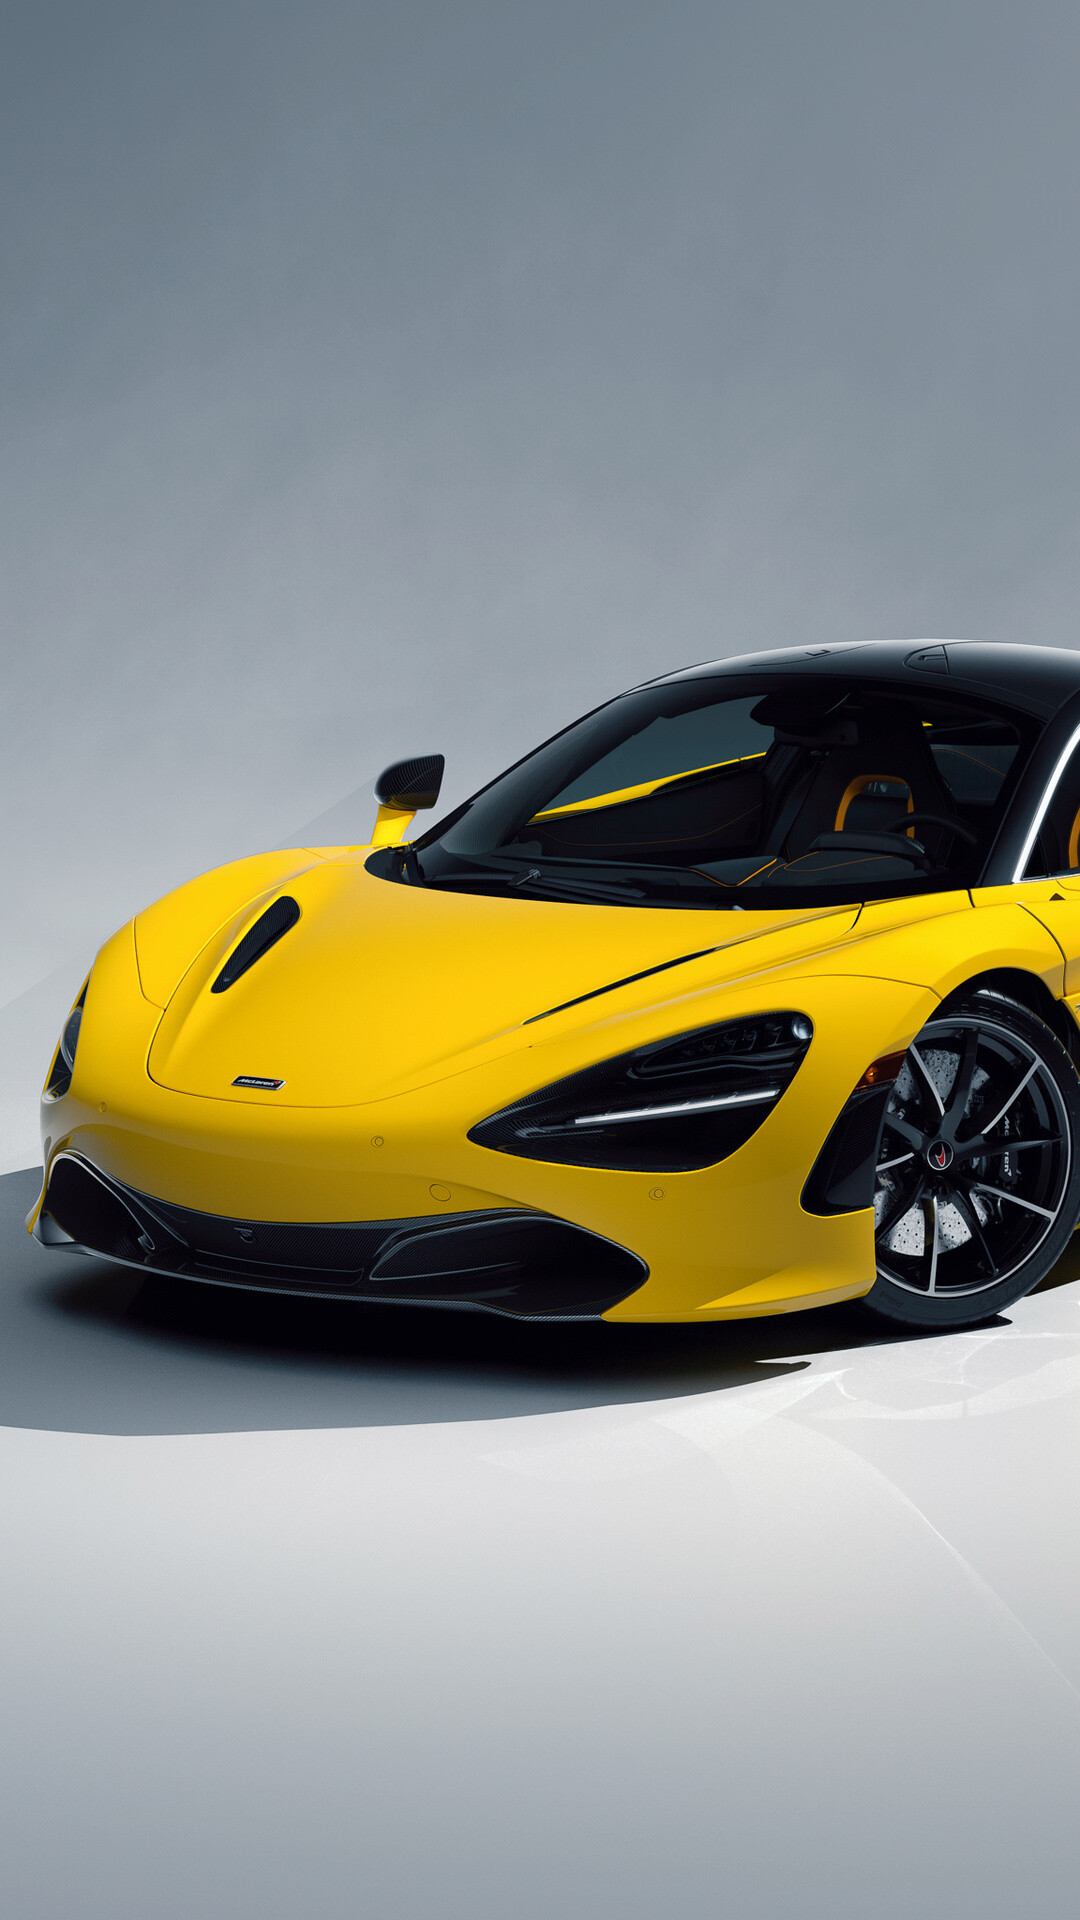 McLaren: Founded by a professional motor racer, Bruce McLaren. 1080x1920 Full HD Wallpaper.